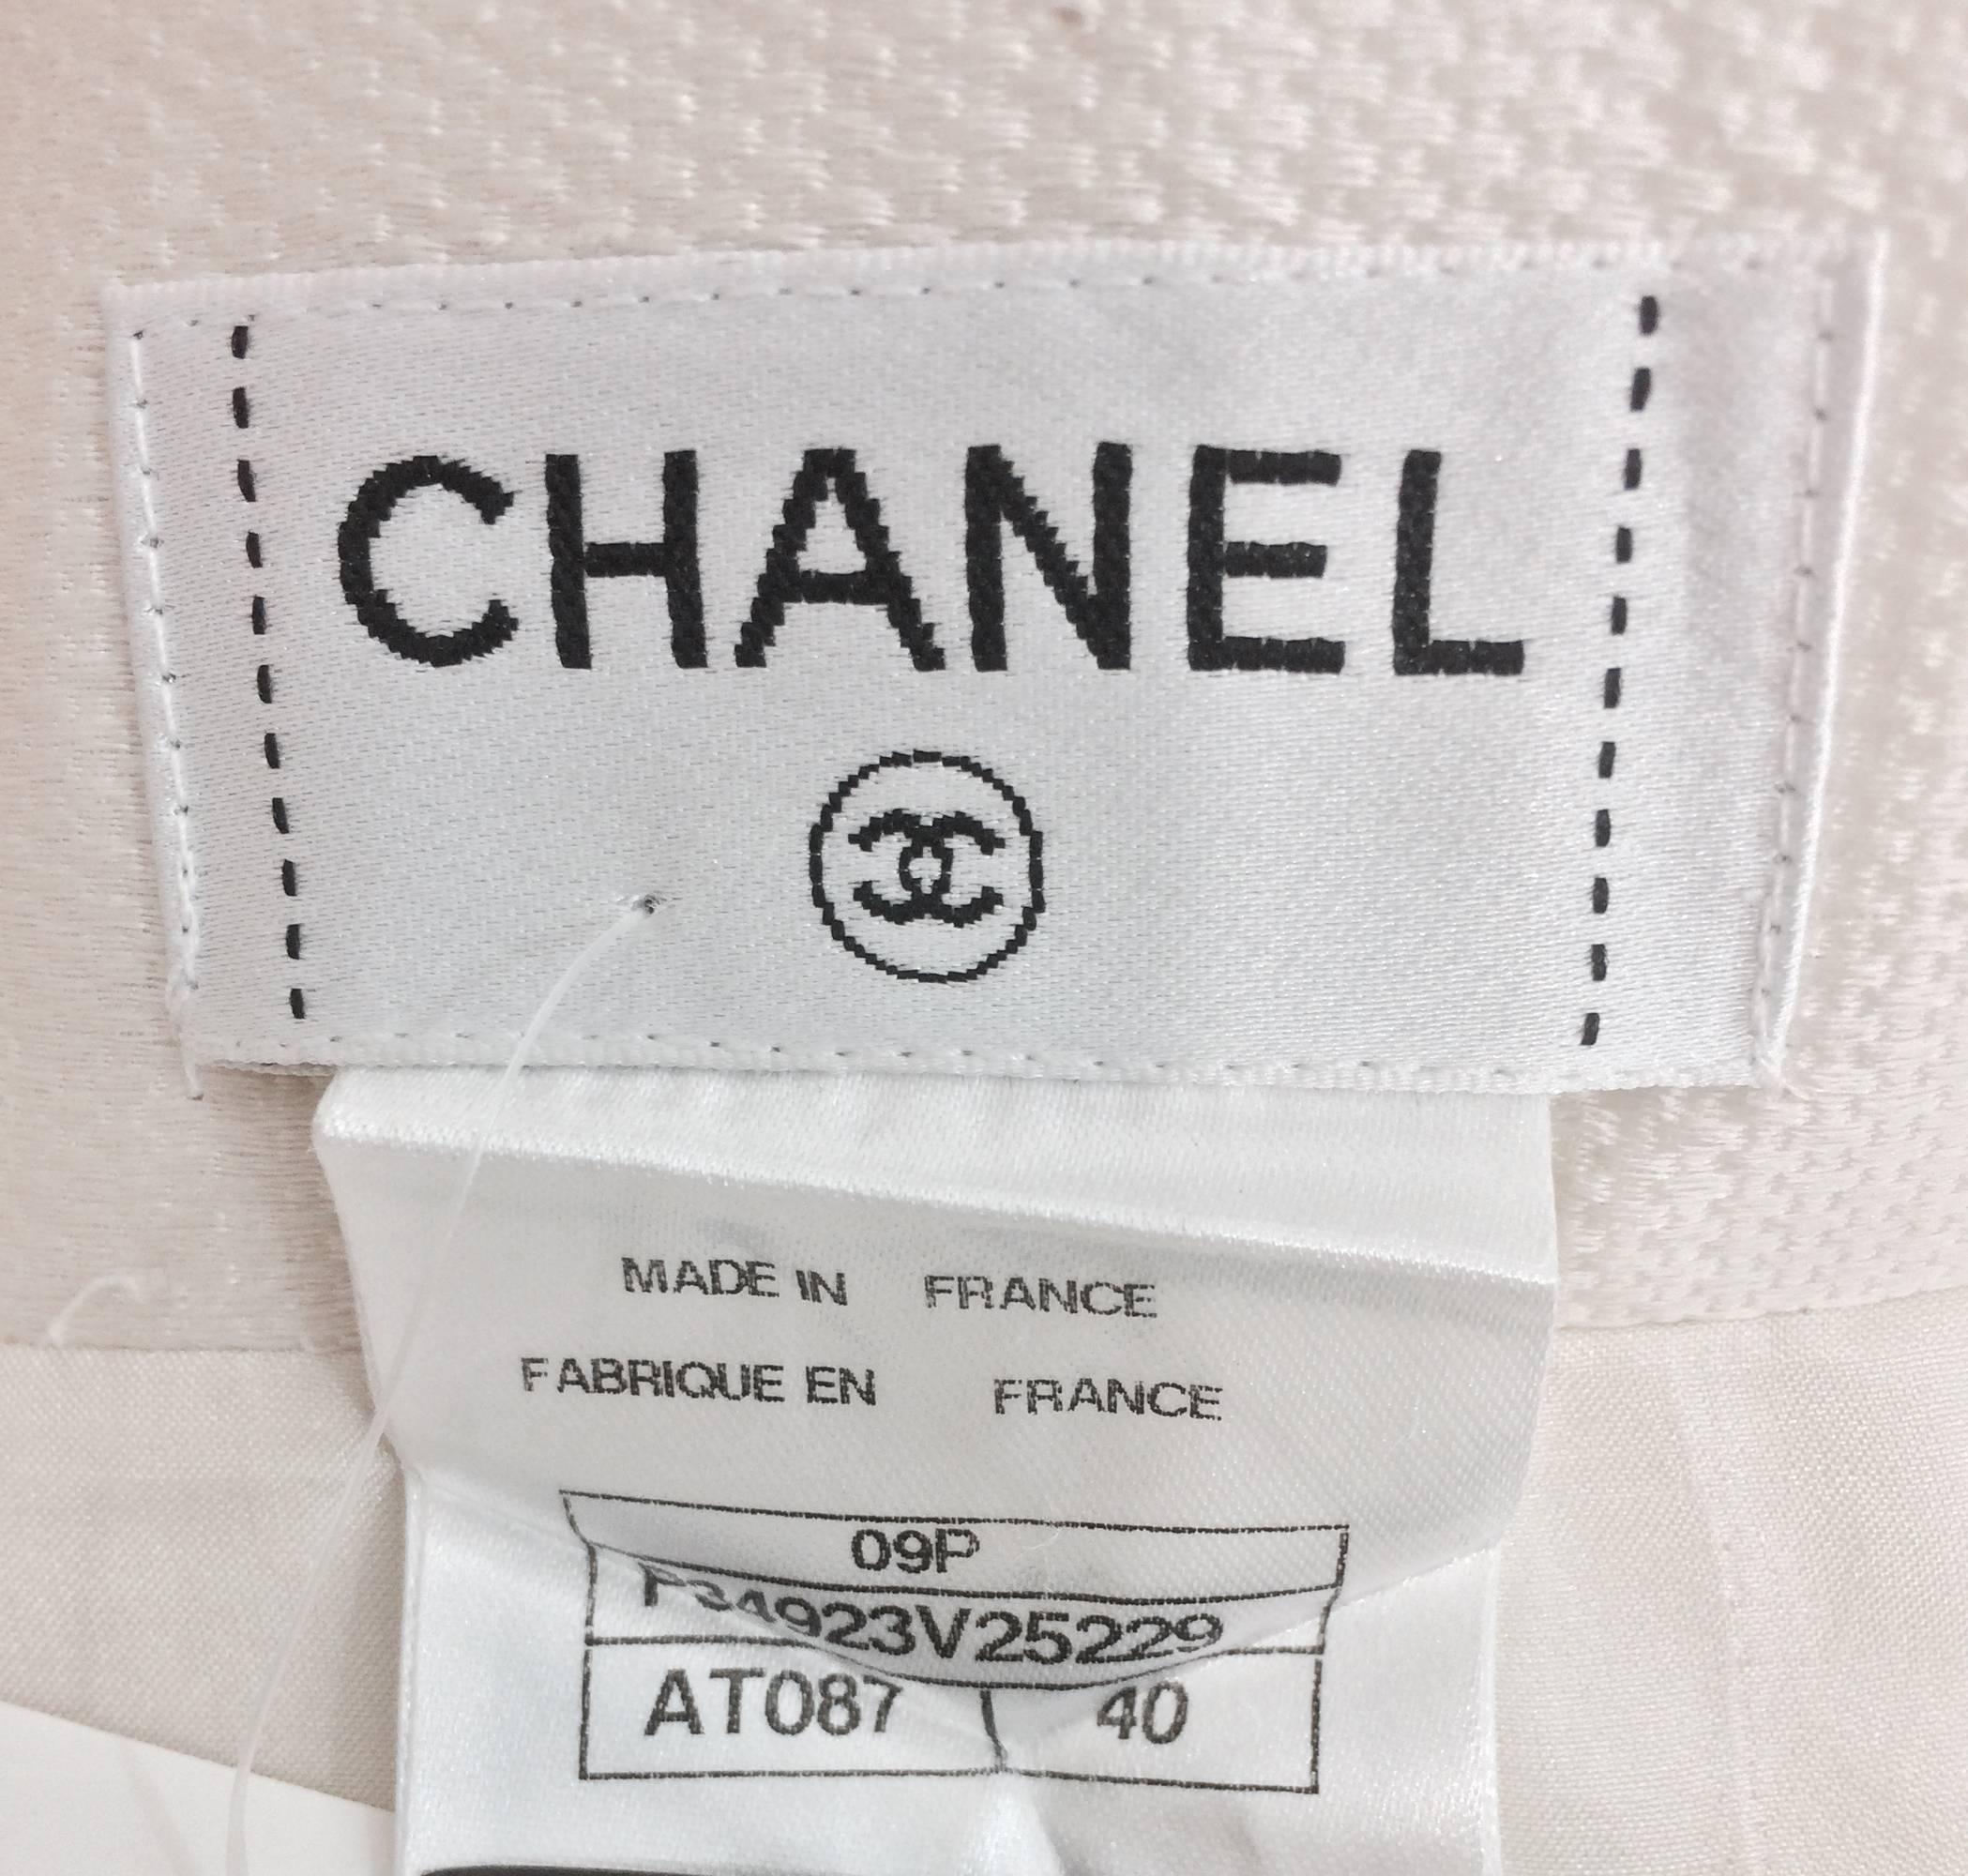 Chanel off white silk cotton pique box pleated skirt 2009 1